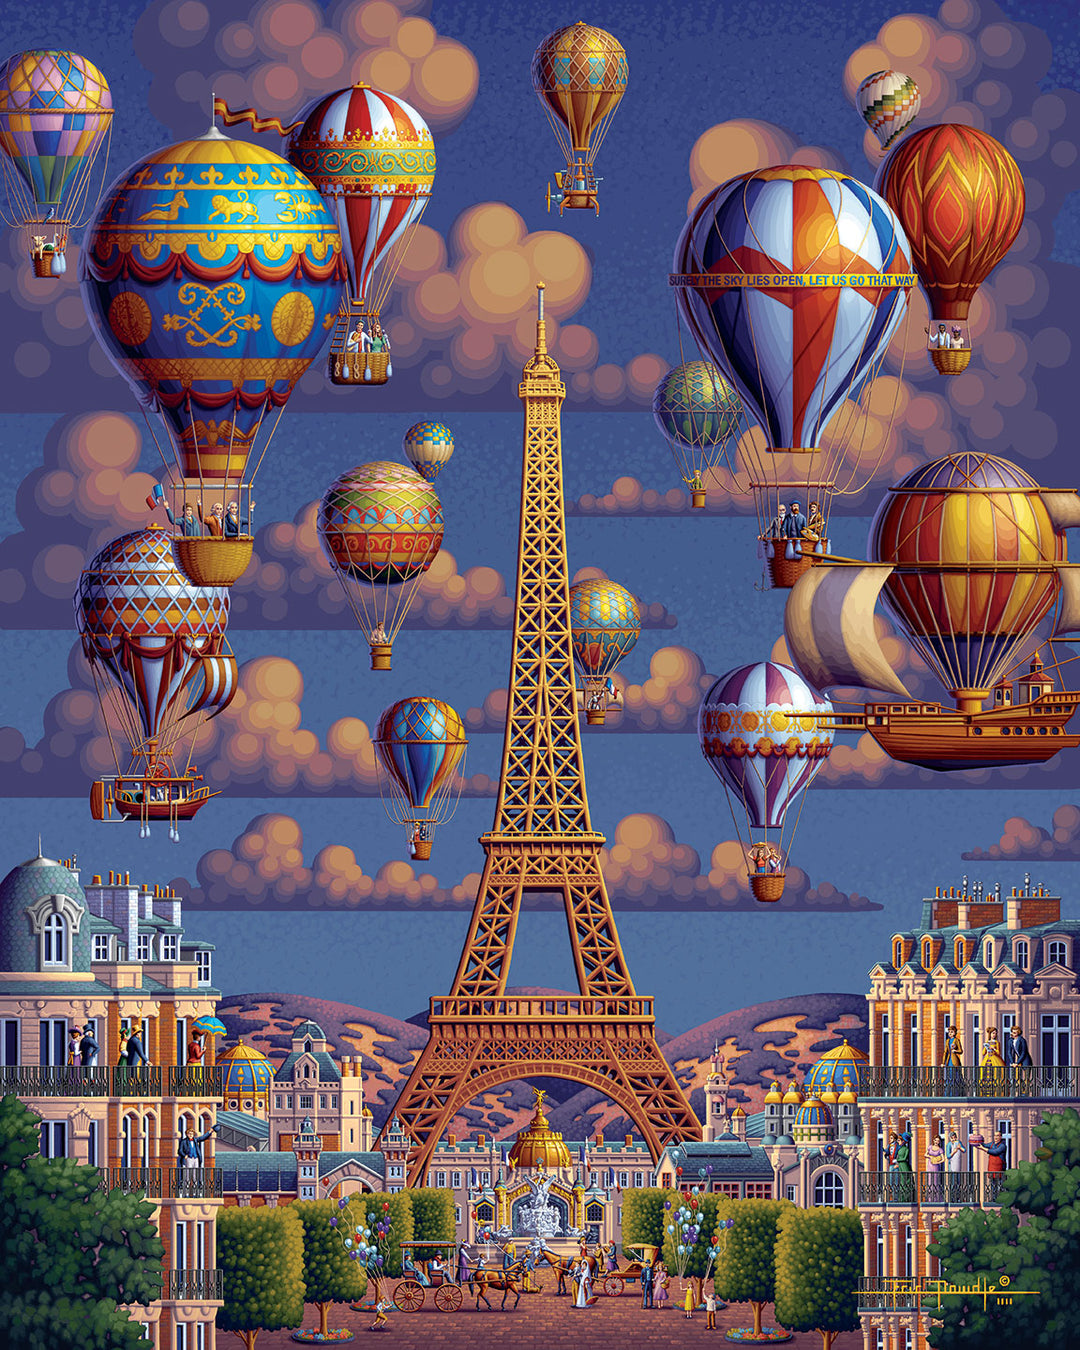 Balloons Over Paris - Personal Puzzle - 210 Piece